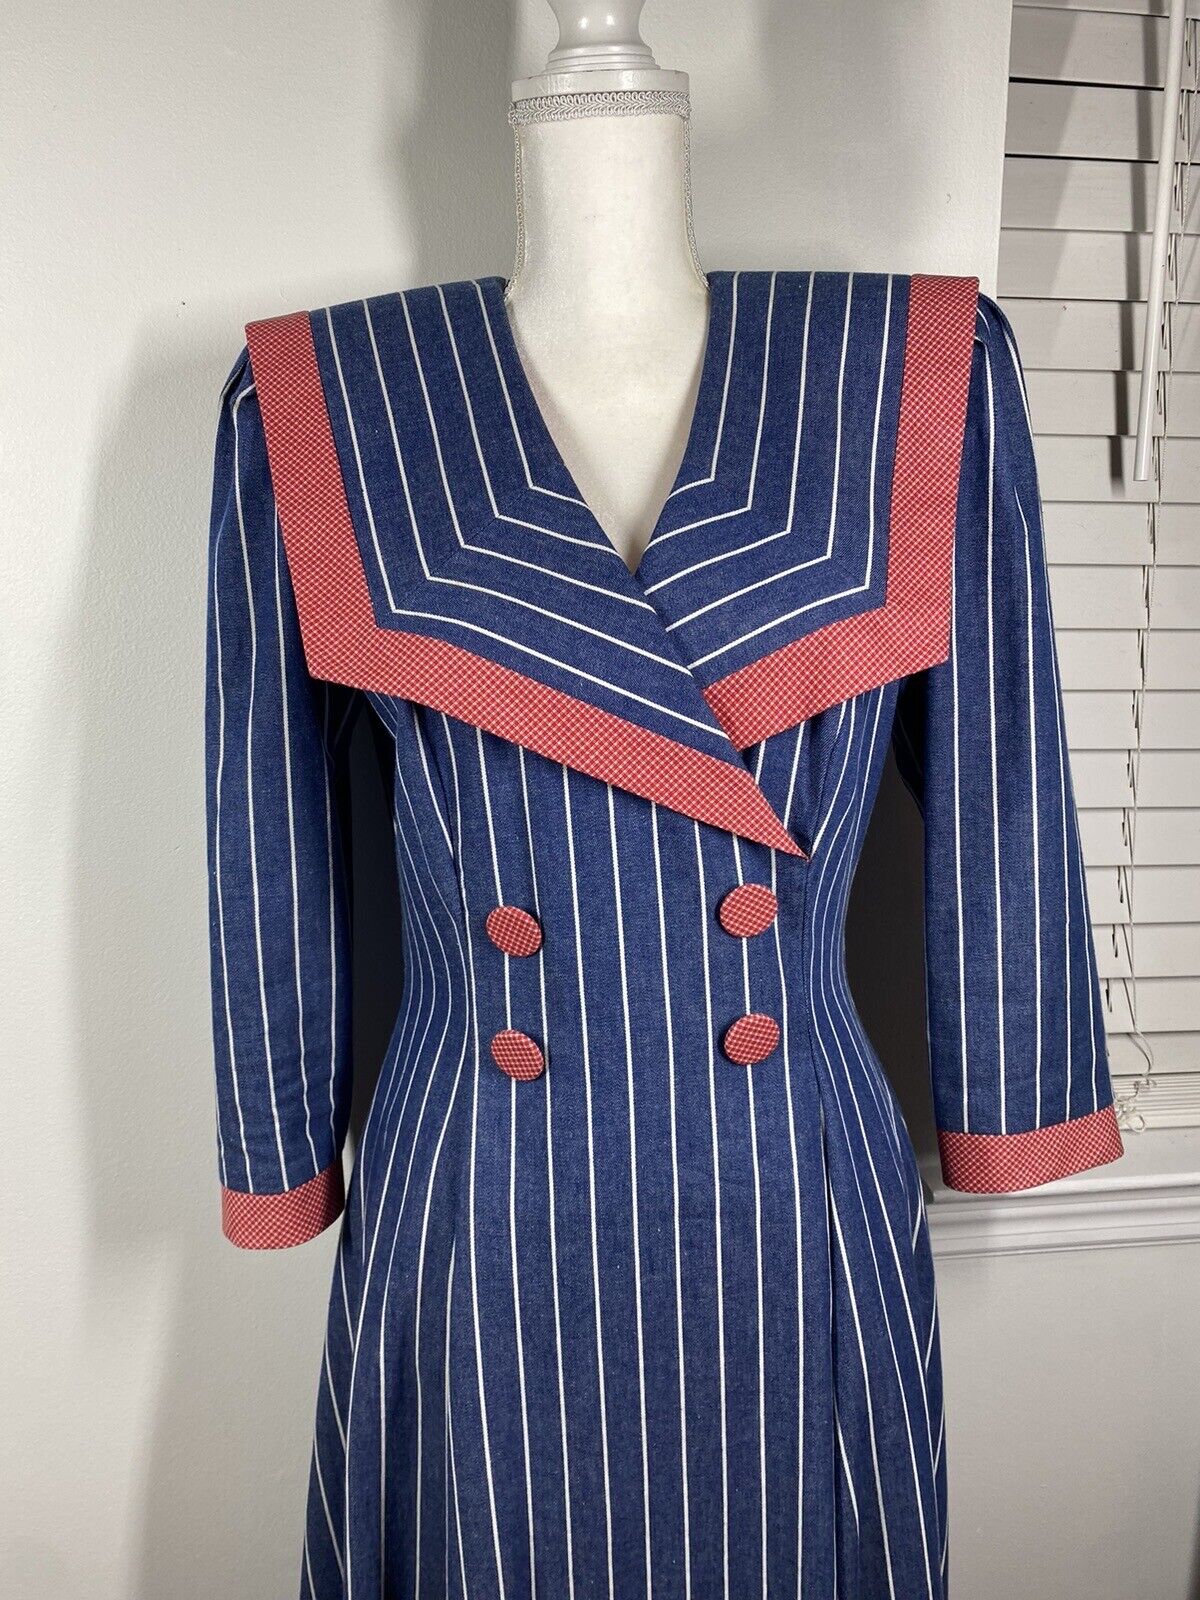 Vintage 1980s LESLIE LUCKS Red Blue White Nautical Sailor Collar Dress,sz 6